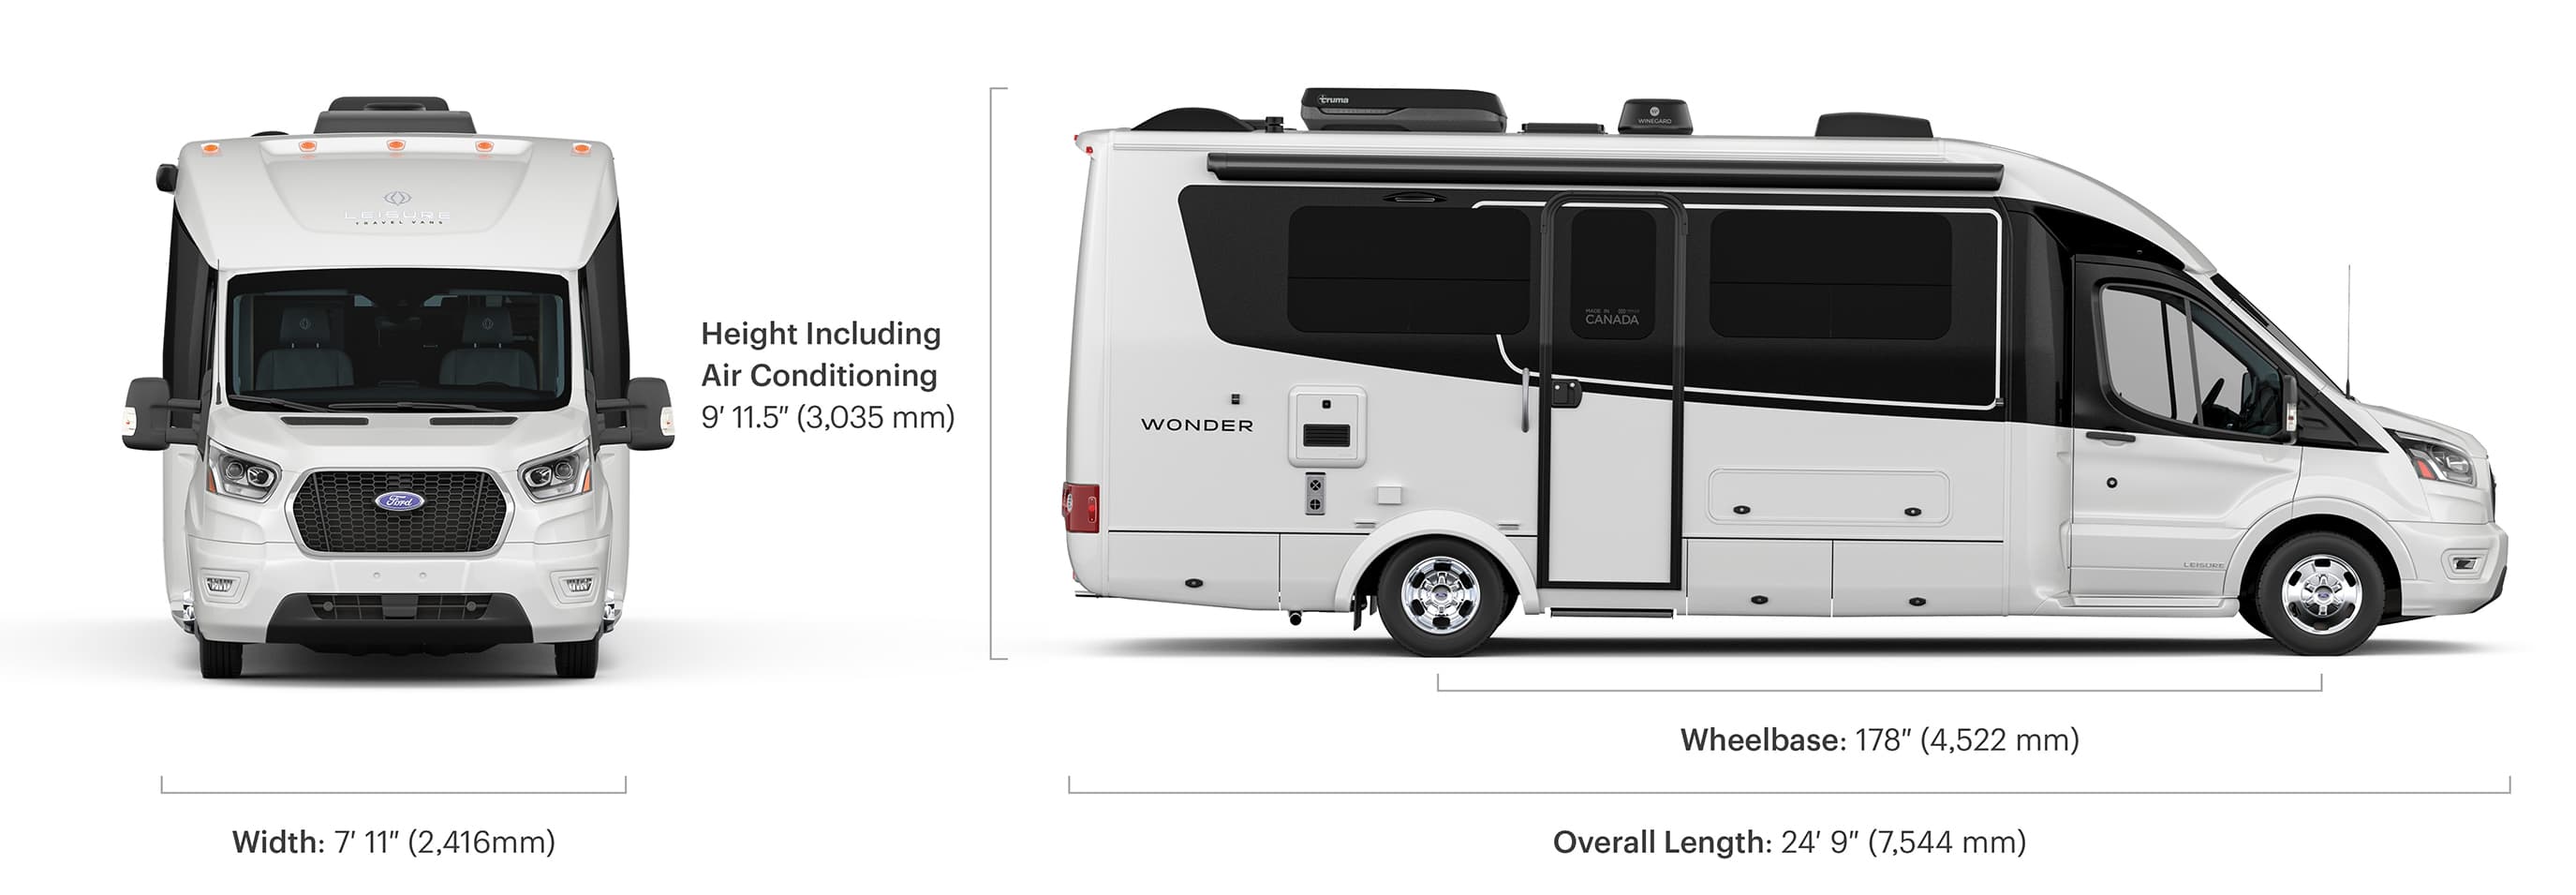 Wonder - Specifications - Leisure Travel Vans